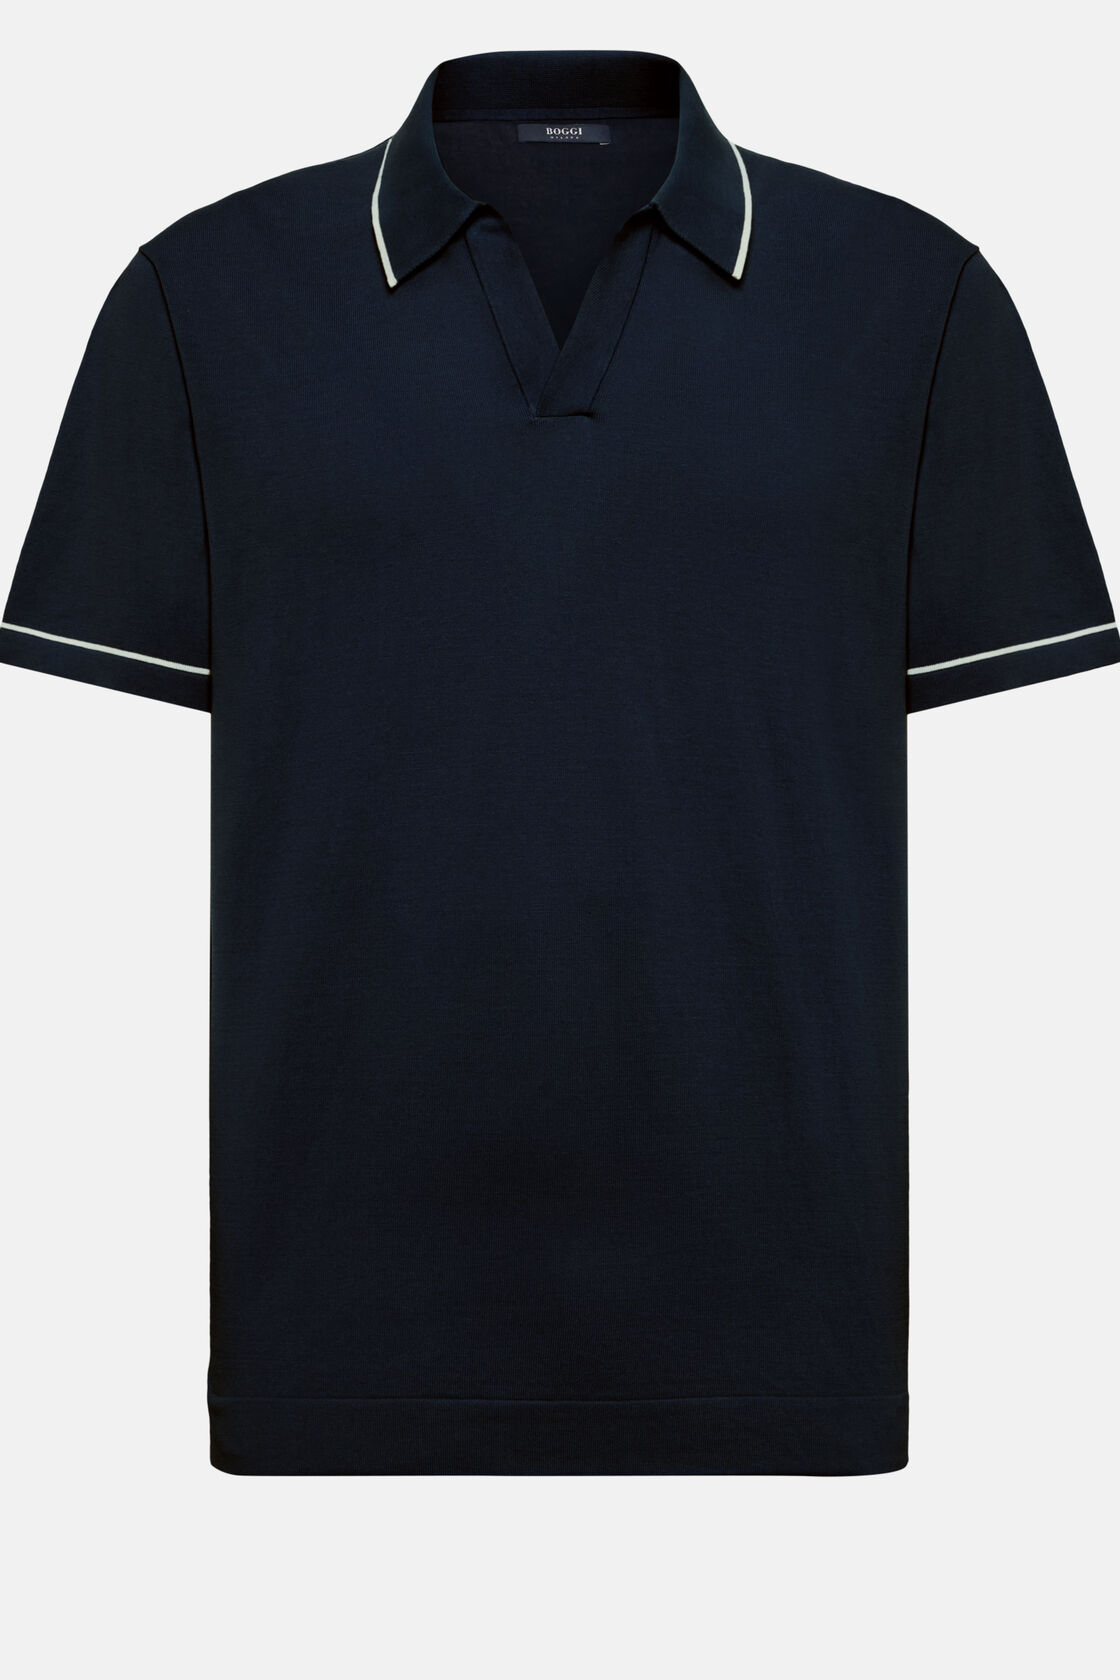 Темно-синяя рубашка поло из хлопкового крепового трикотажа для спорта и фитнеса – фото №  6